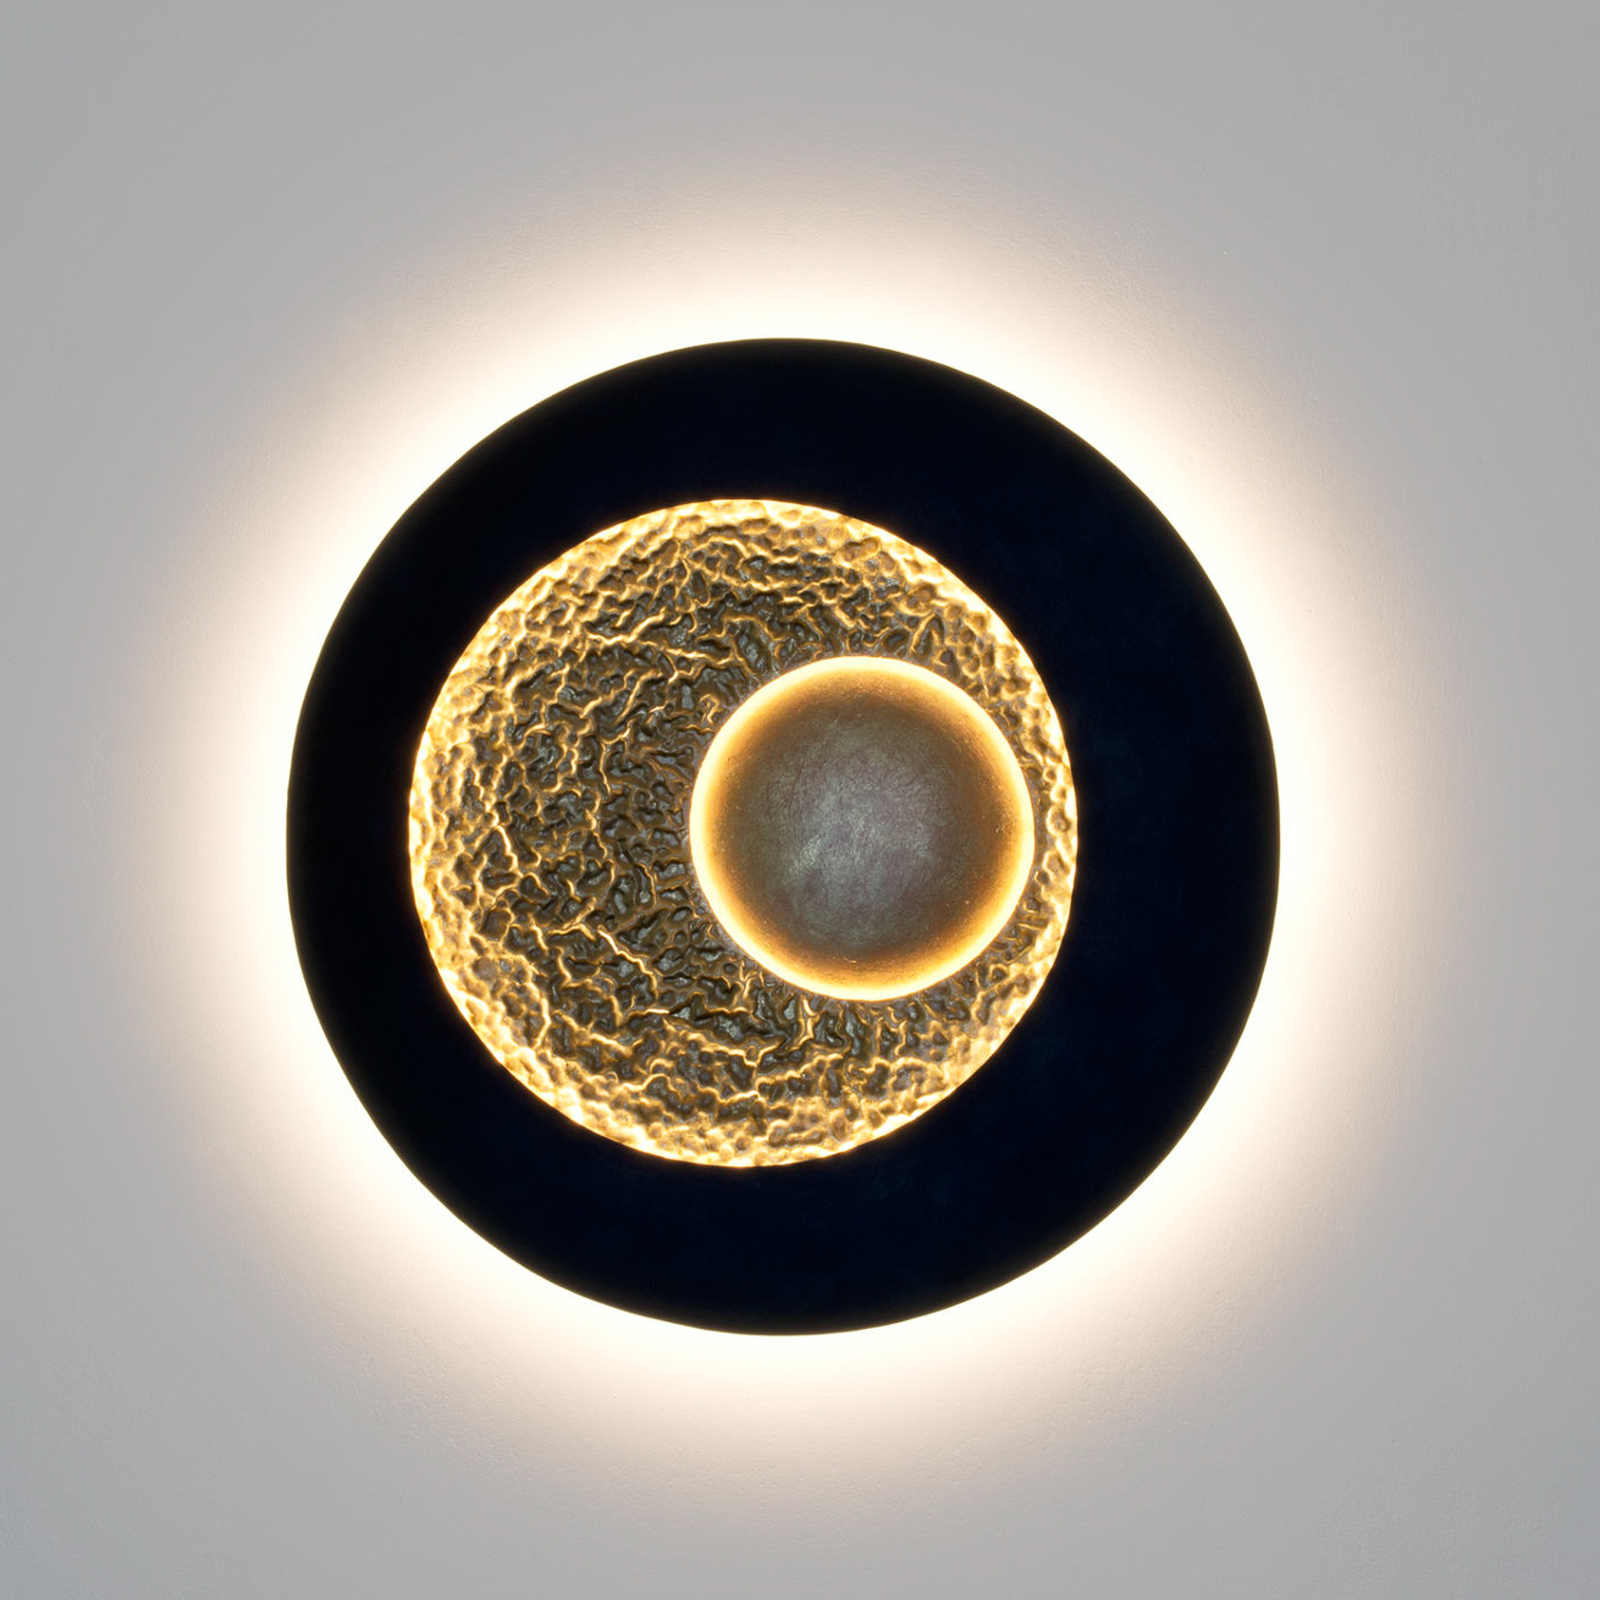 Urano LED-es fali lámpa, barna-fekete/arany, Ø 60 cm, vas